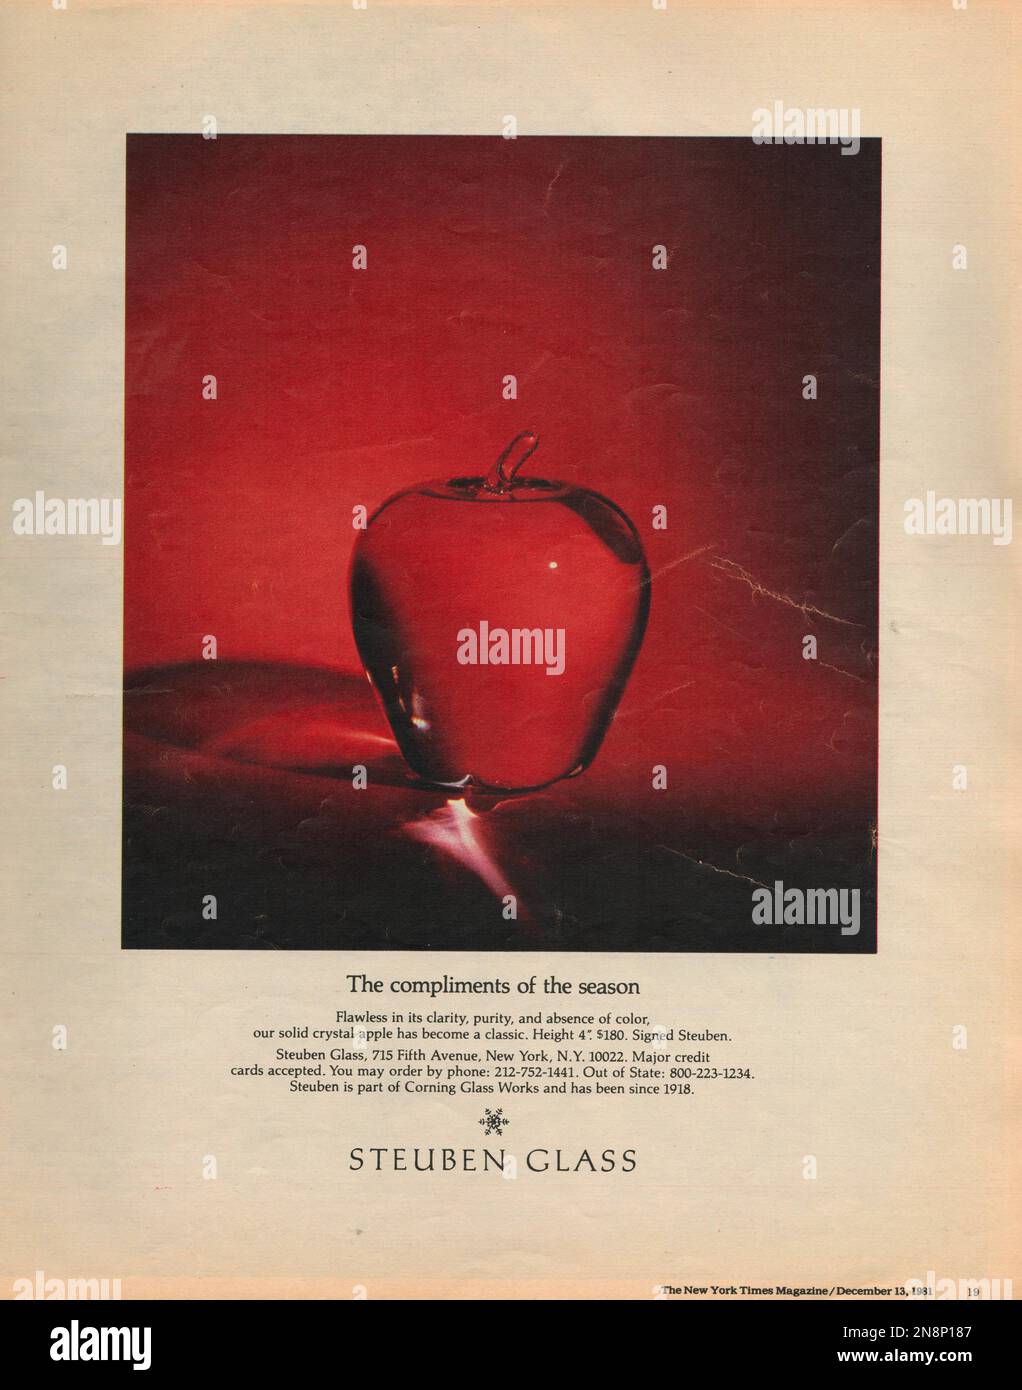 Steuben Glass advertisement magazine advertisement 1981, paper advert The New York Times magazine Stock Photo